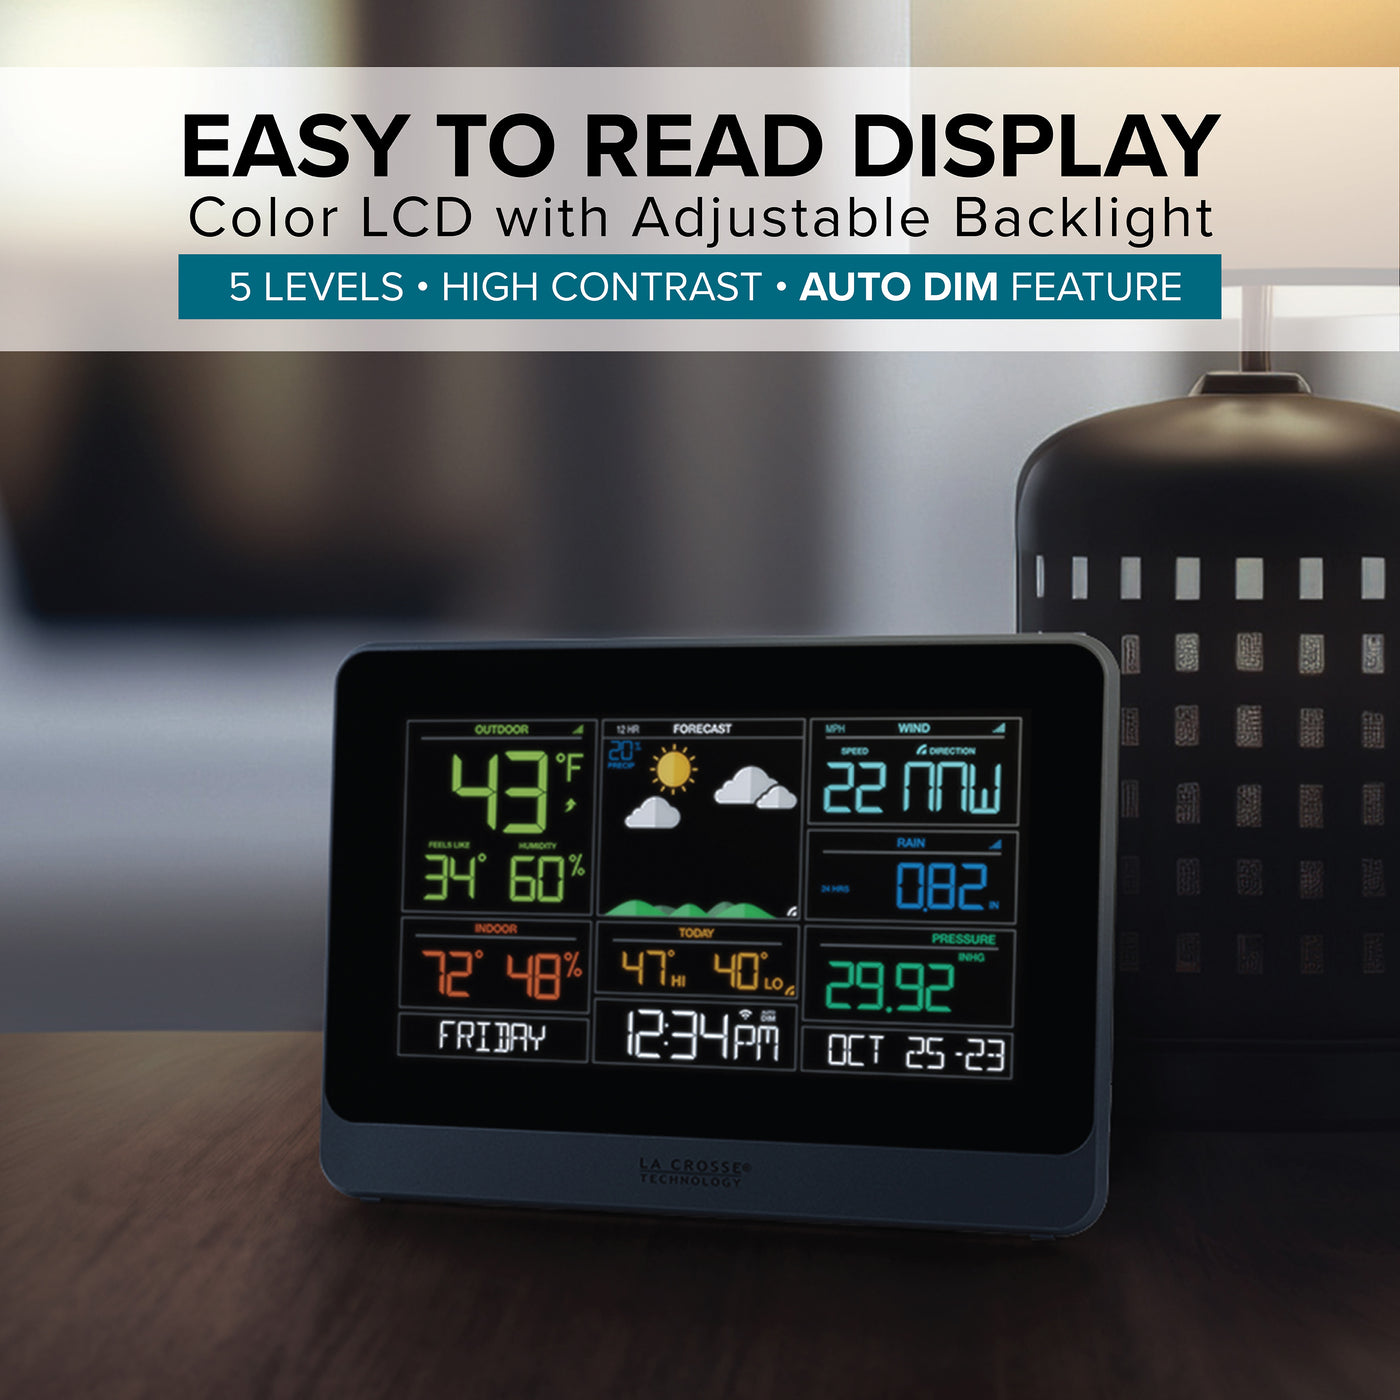 V30V4 Easy to read display